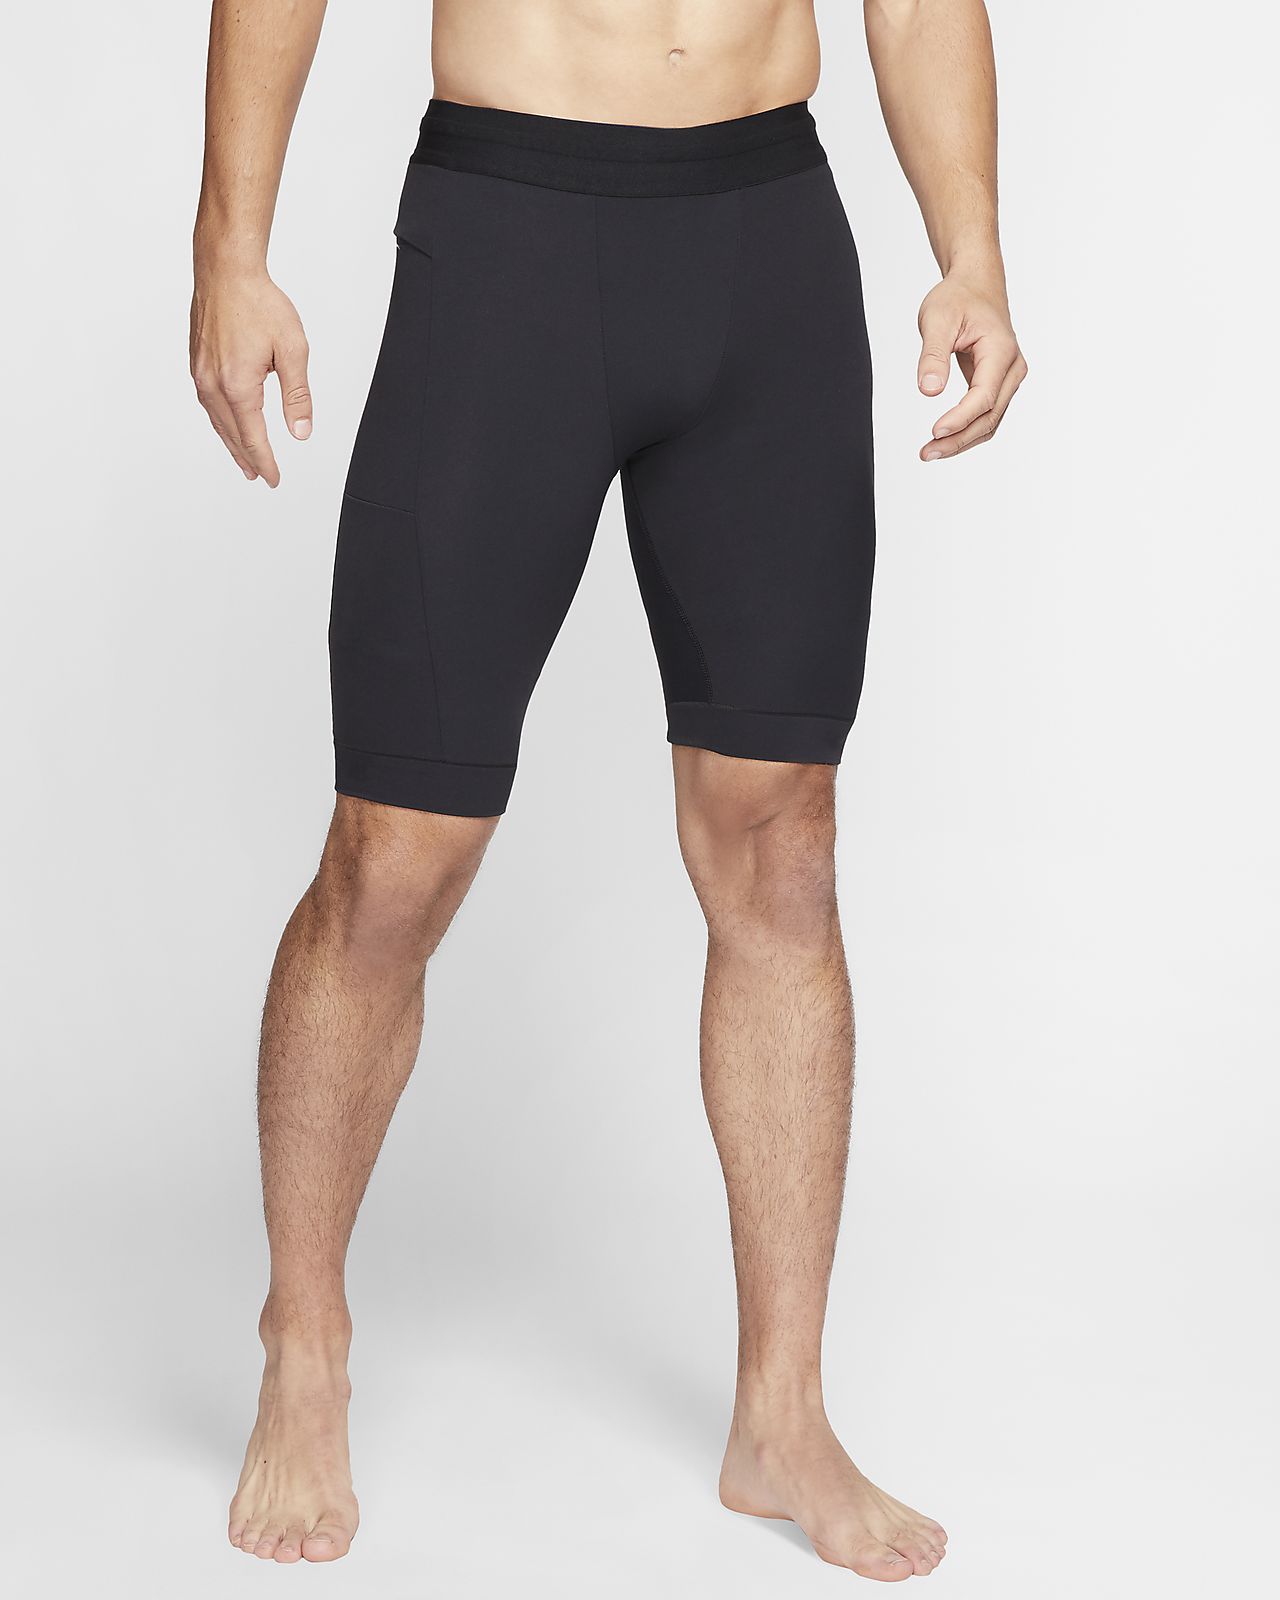 yoga shorts for men